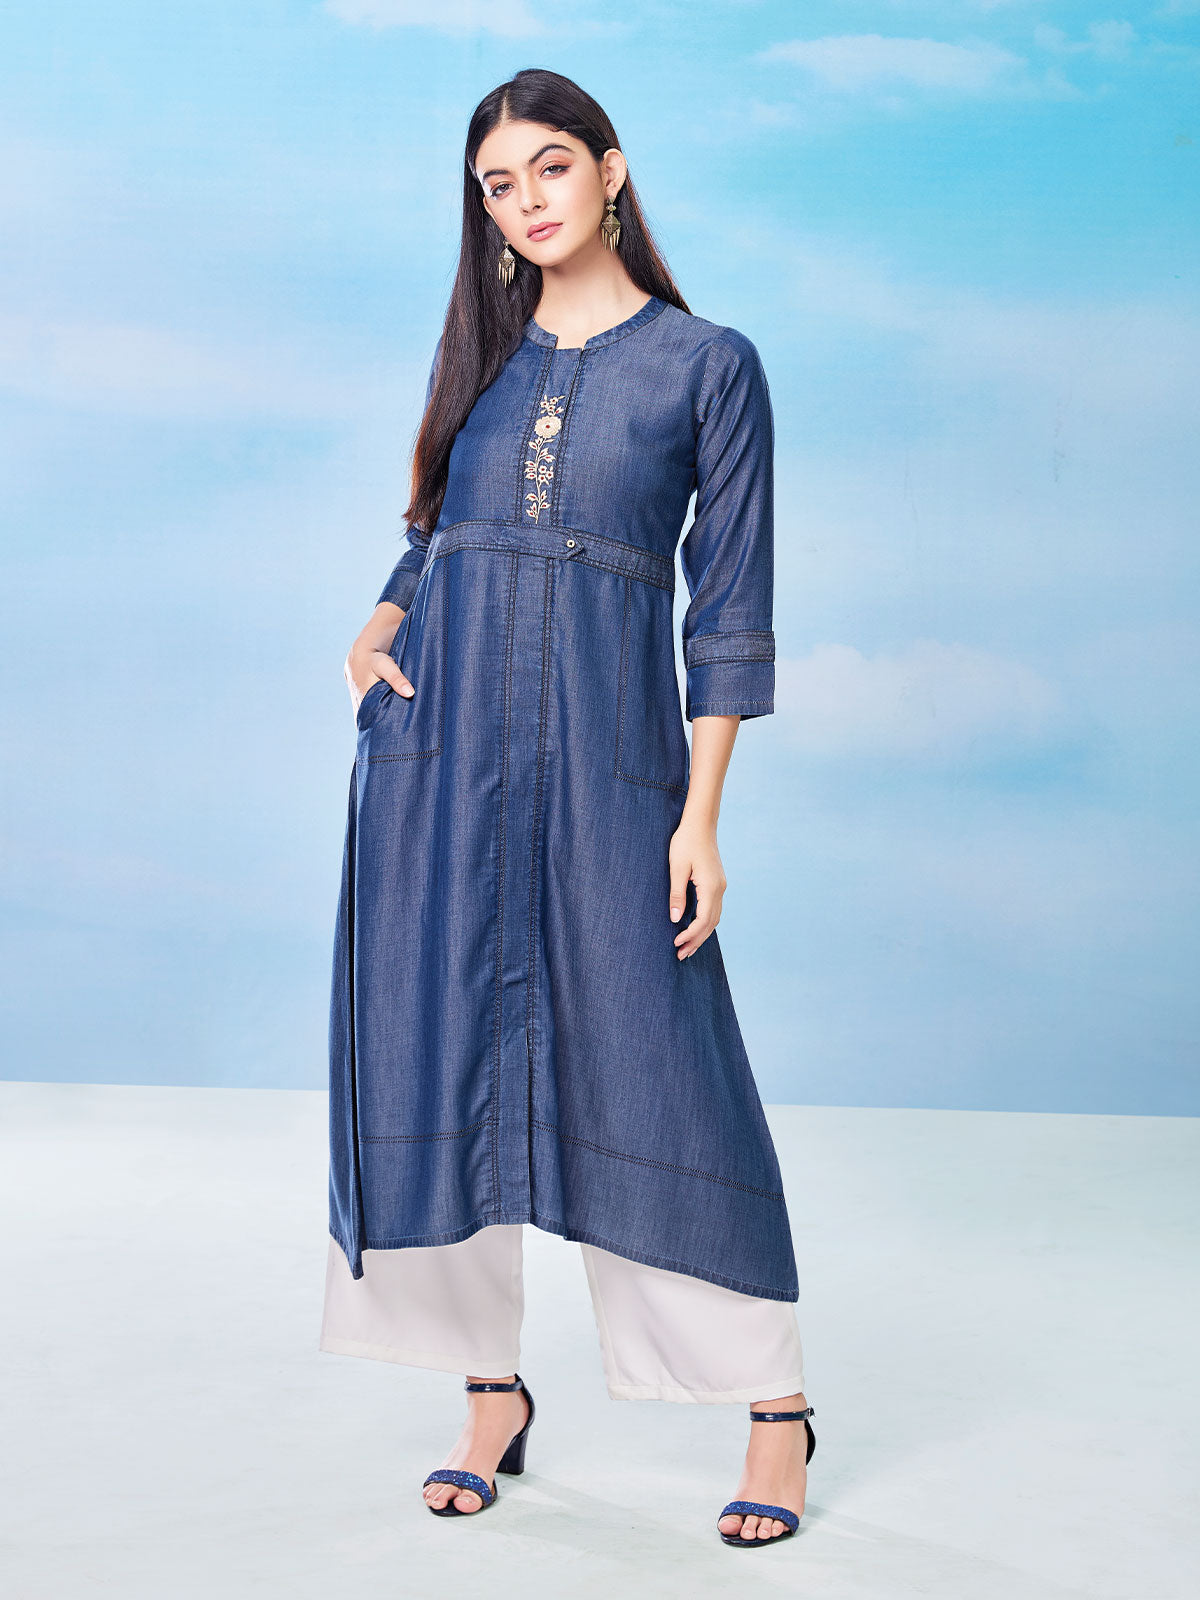 Buy Vahson Women Embroidered Denim Kurta Dress (42, blue01) at Amazon.in